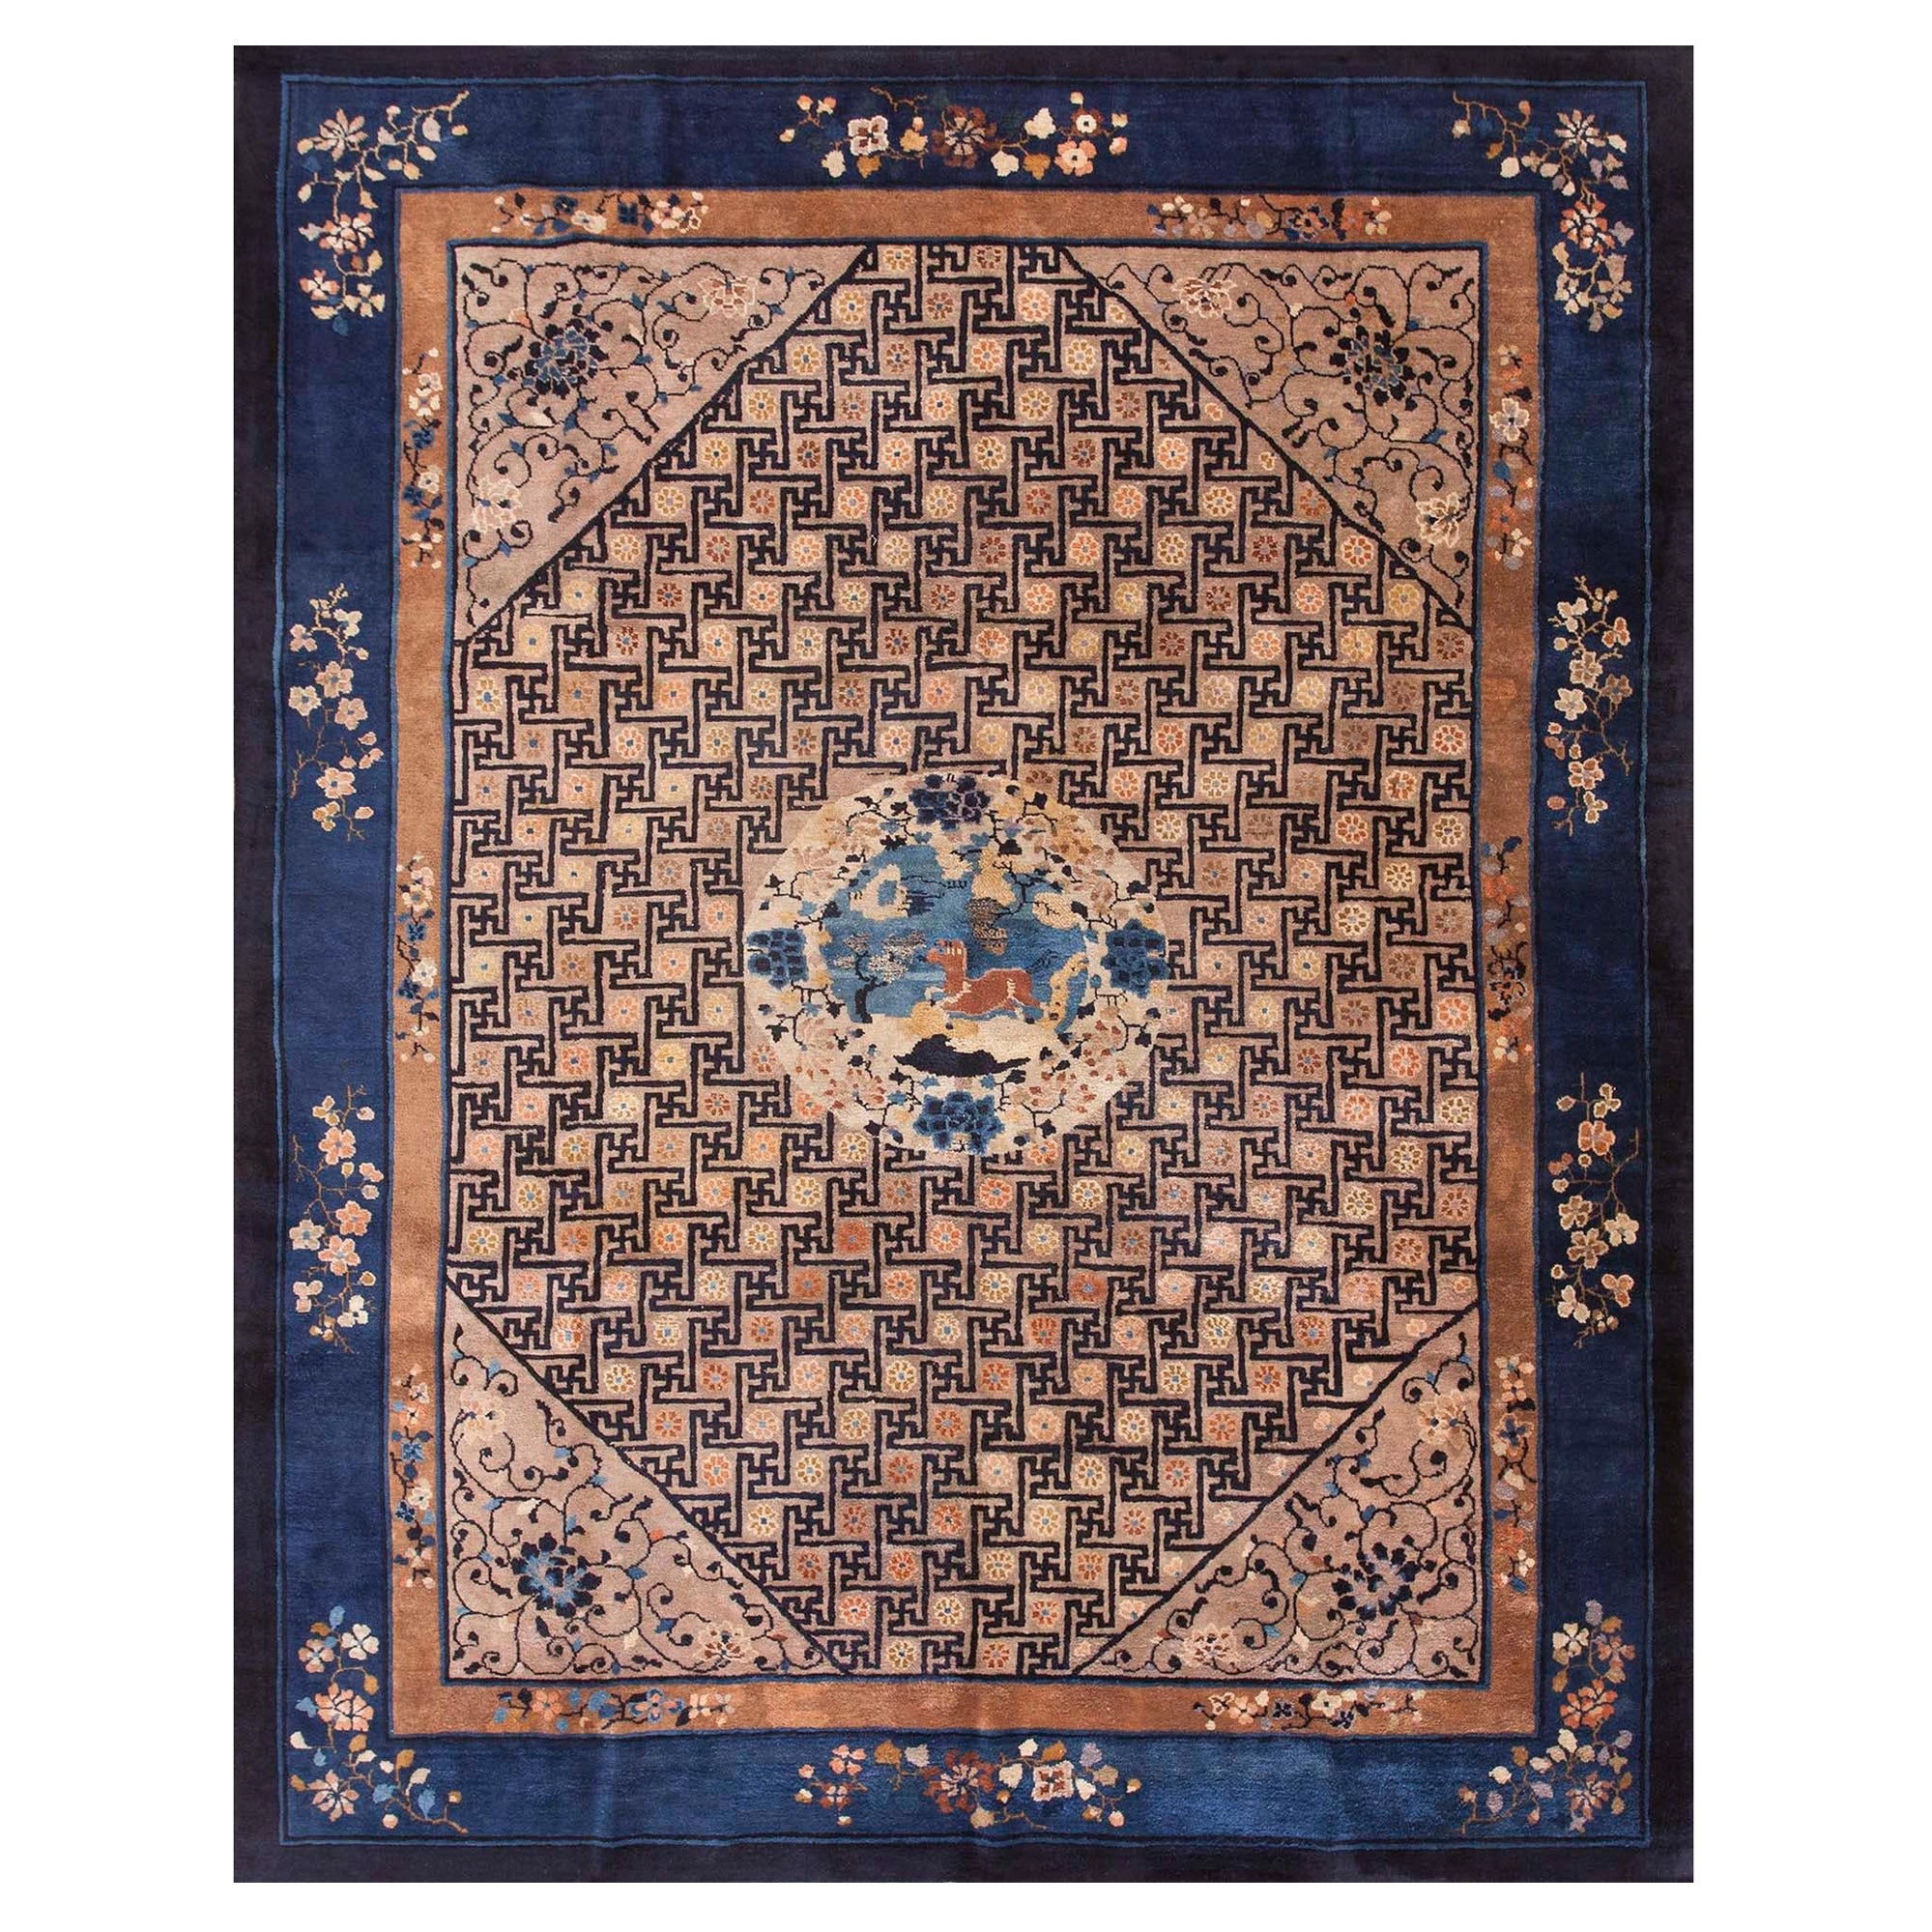 Late 19th Century Chinese Peking Carpet ( 9'2" x 11'8" - 280 x 355 cm )